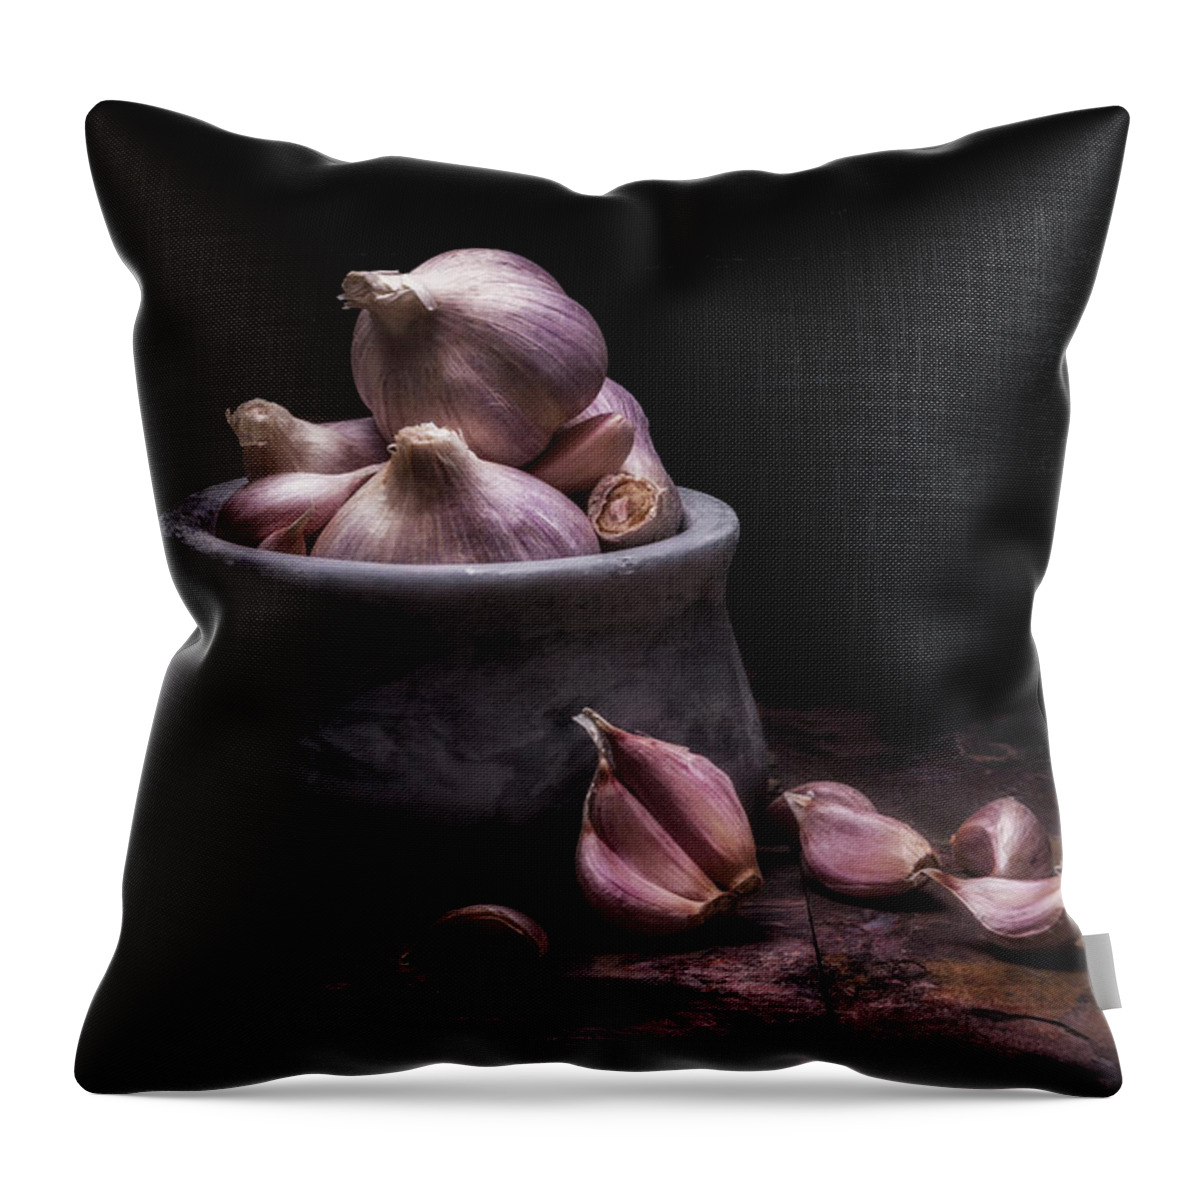 Garlic Throw Pillow featuring the photograph Bowl of Garlic by Tom Mc Nemar